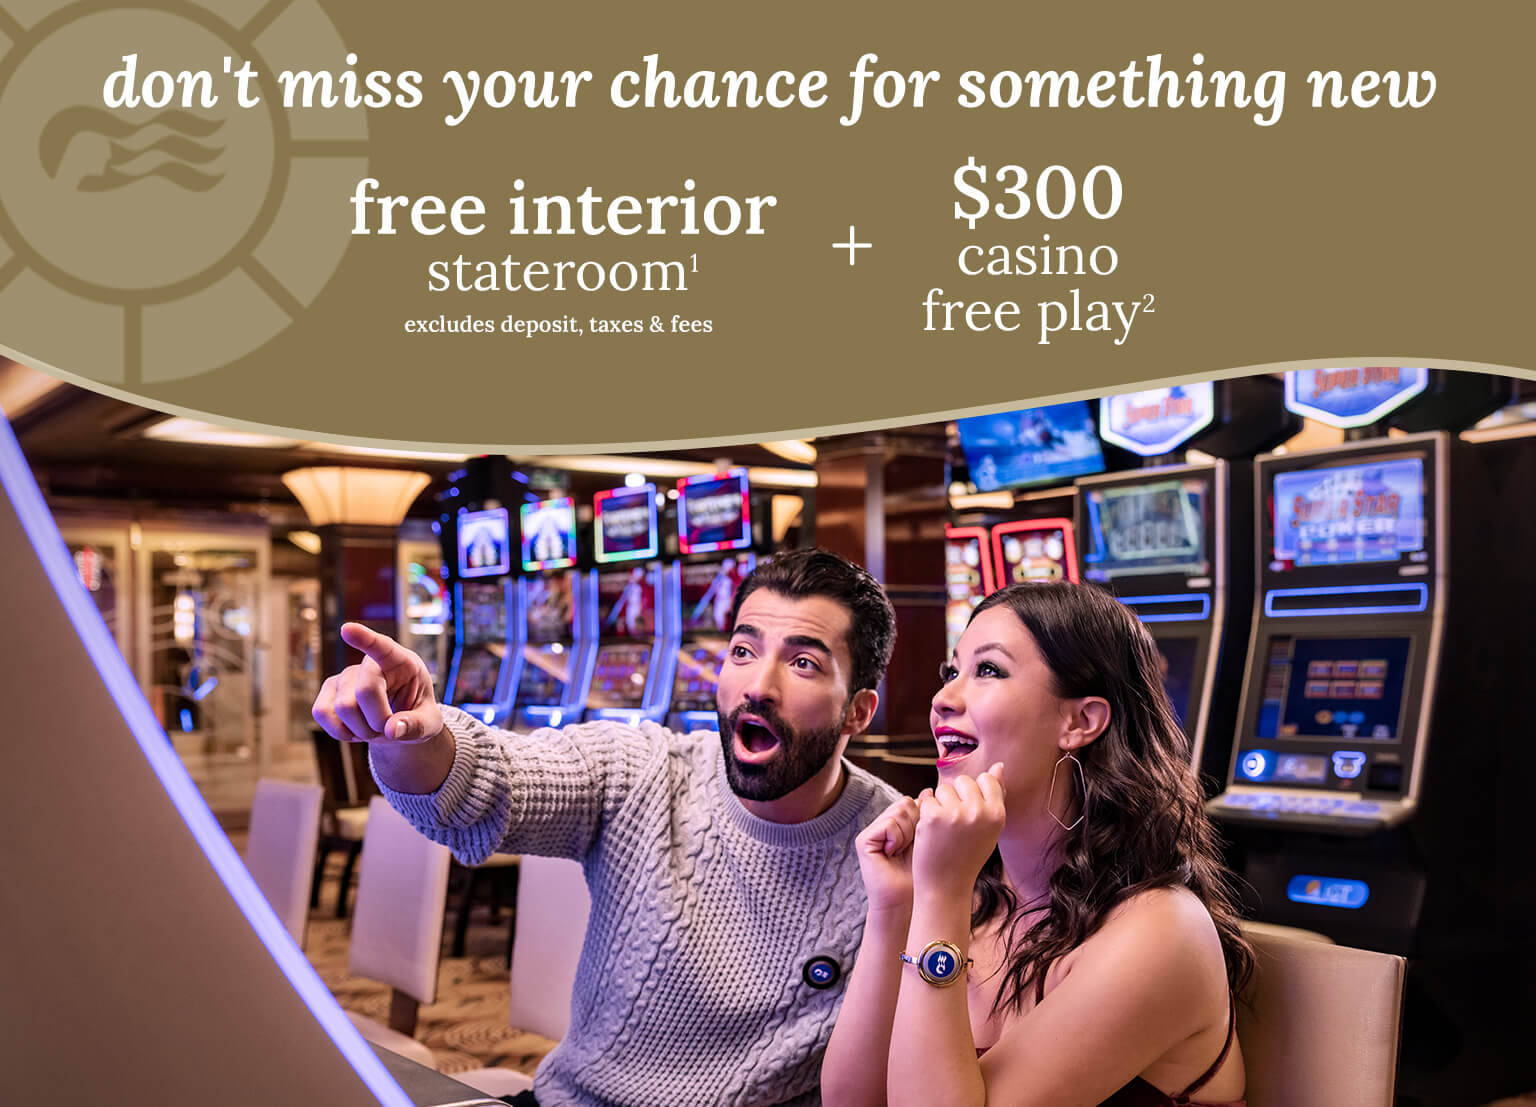 free interior stateroom + $300 casino free play